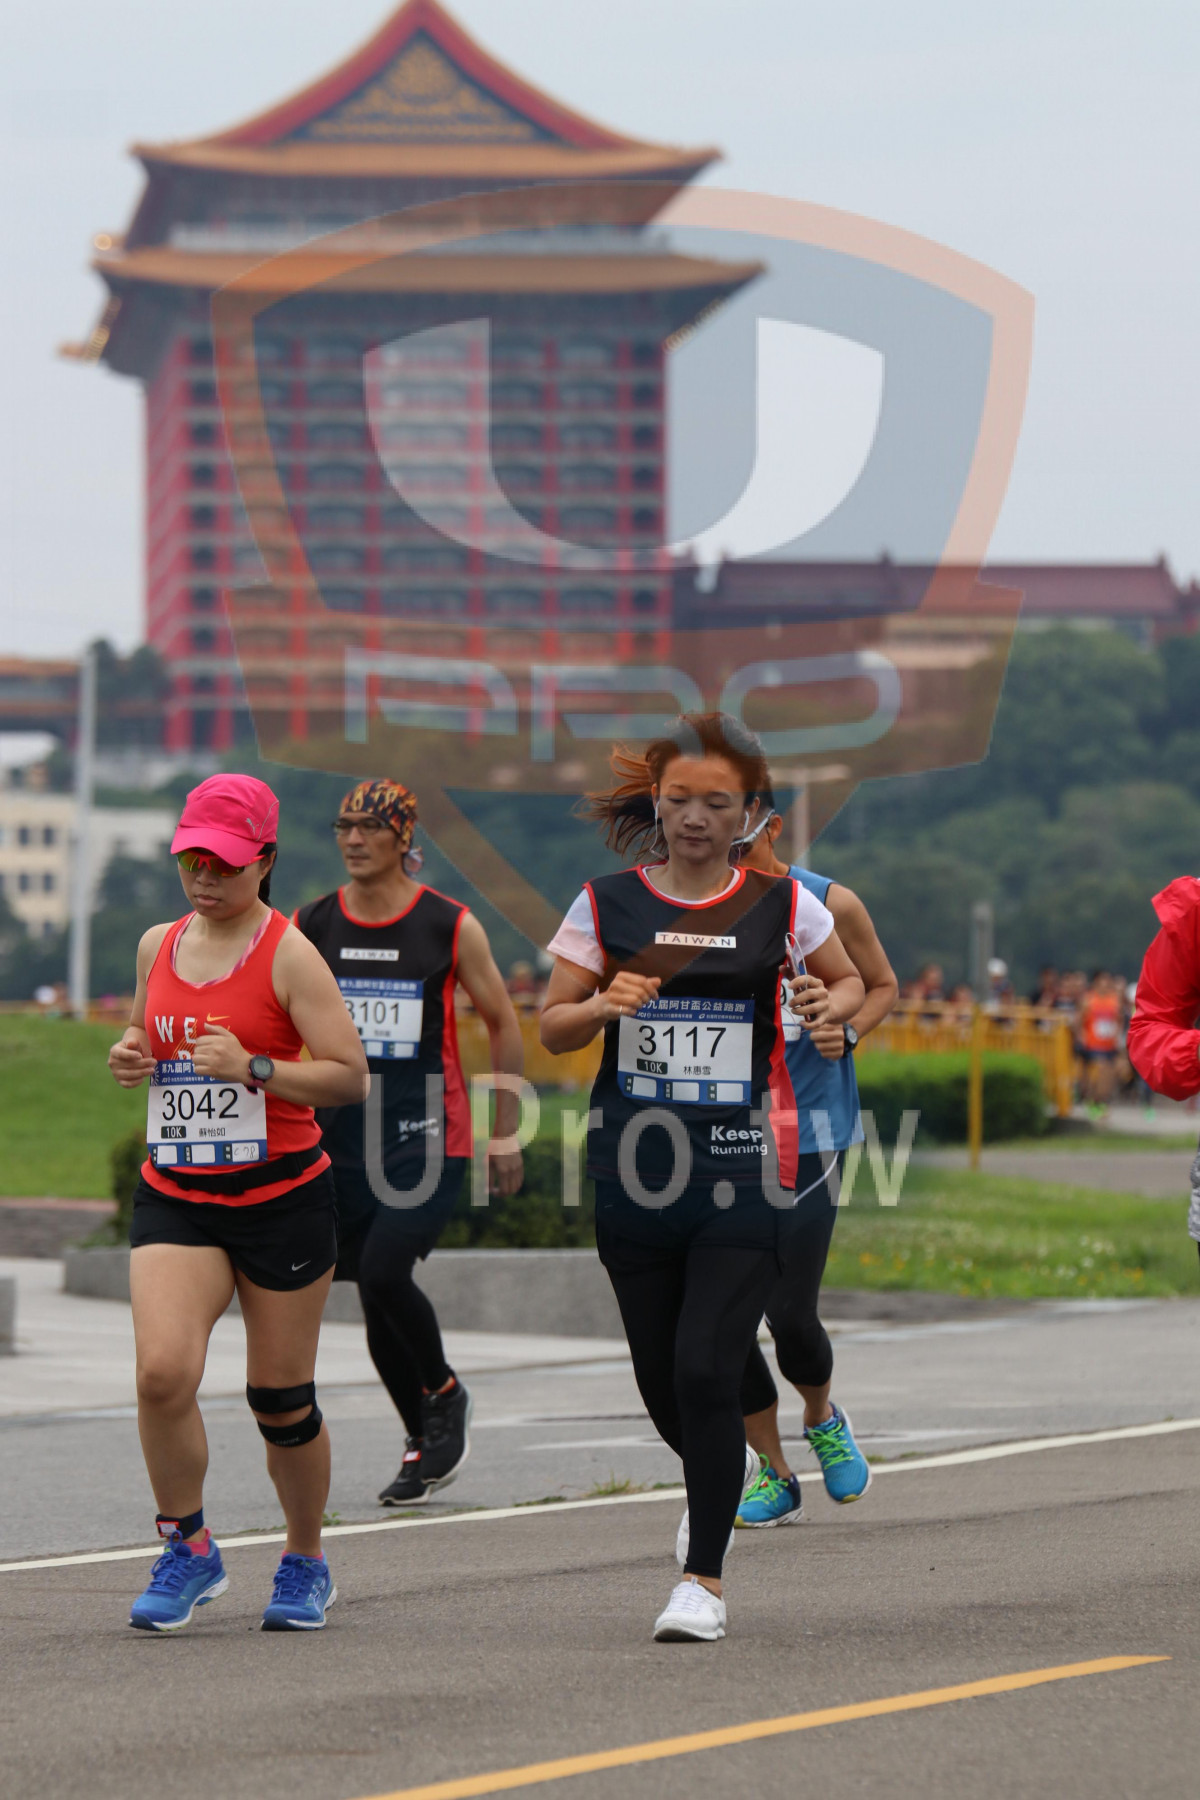 3101,,3117,,3042,Keer,Keep,Running|2018 第九屆阿甘盃公益路跑|Soryu Asuka Langley